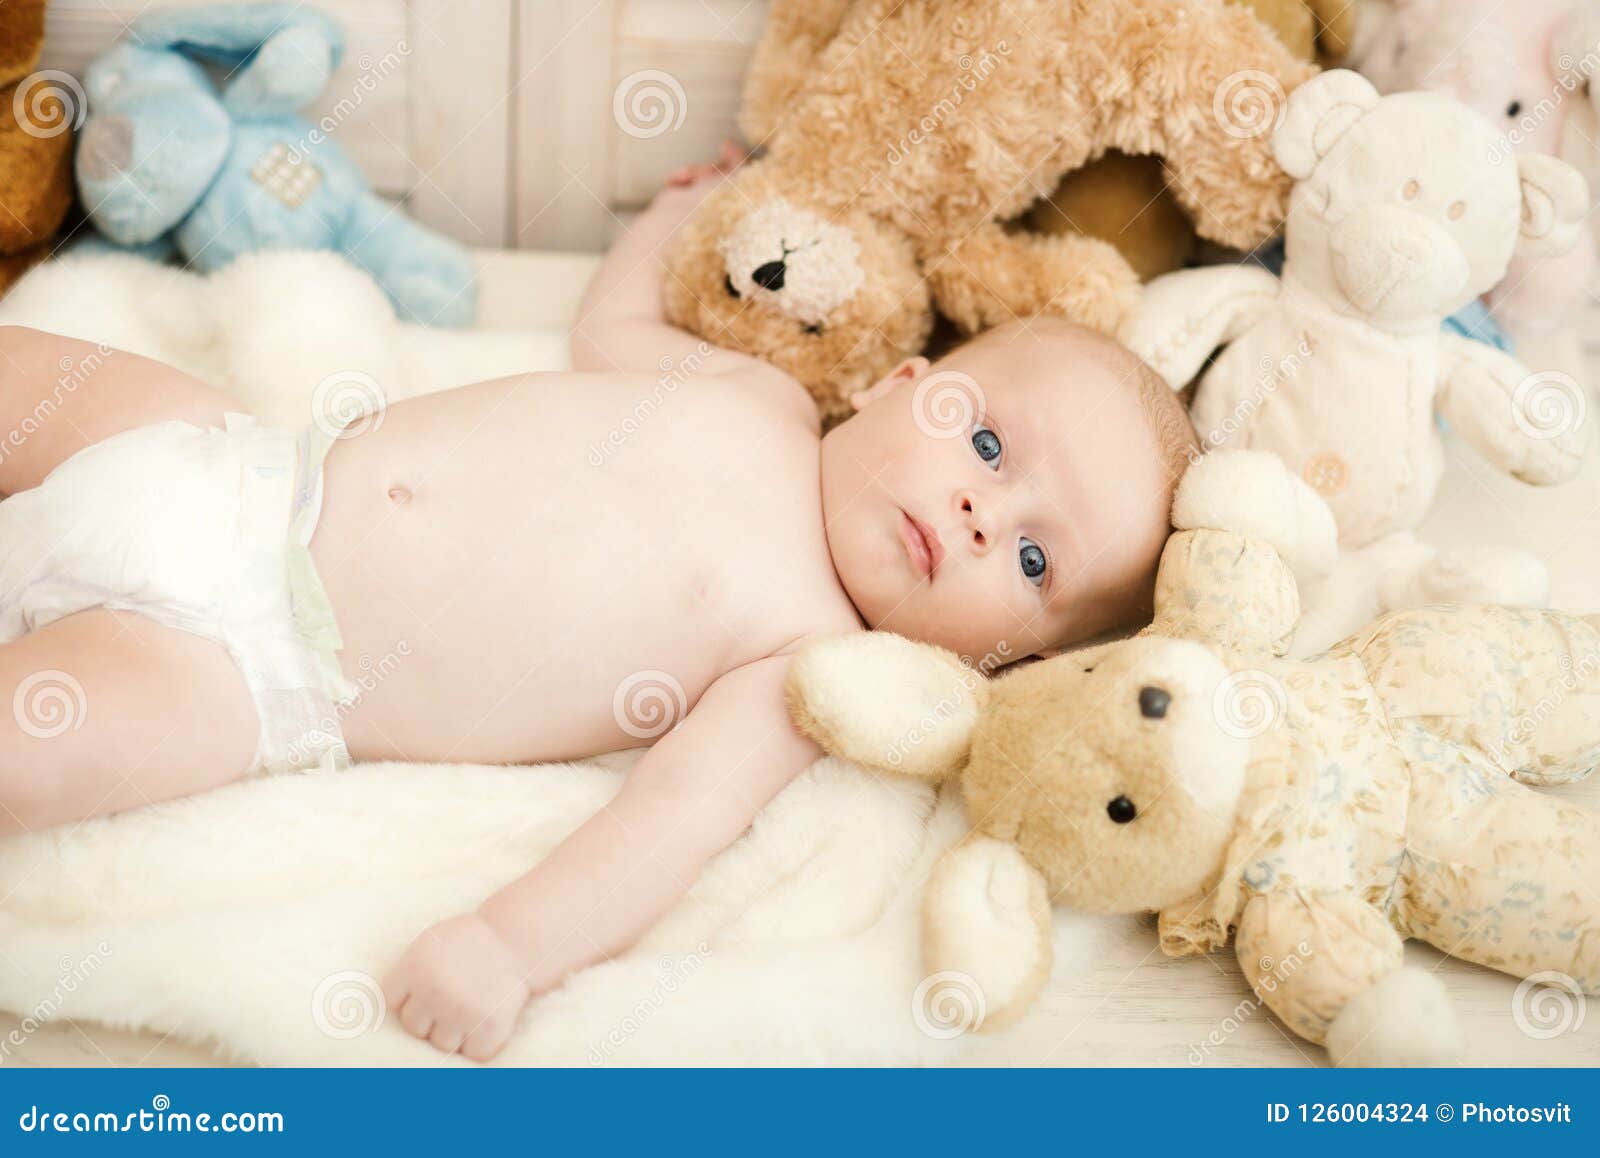 soft toys for newborn baby boy